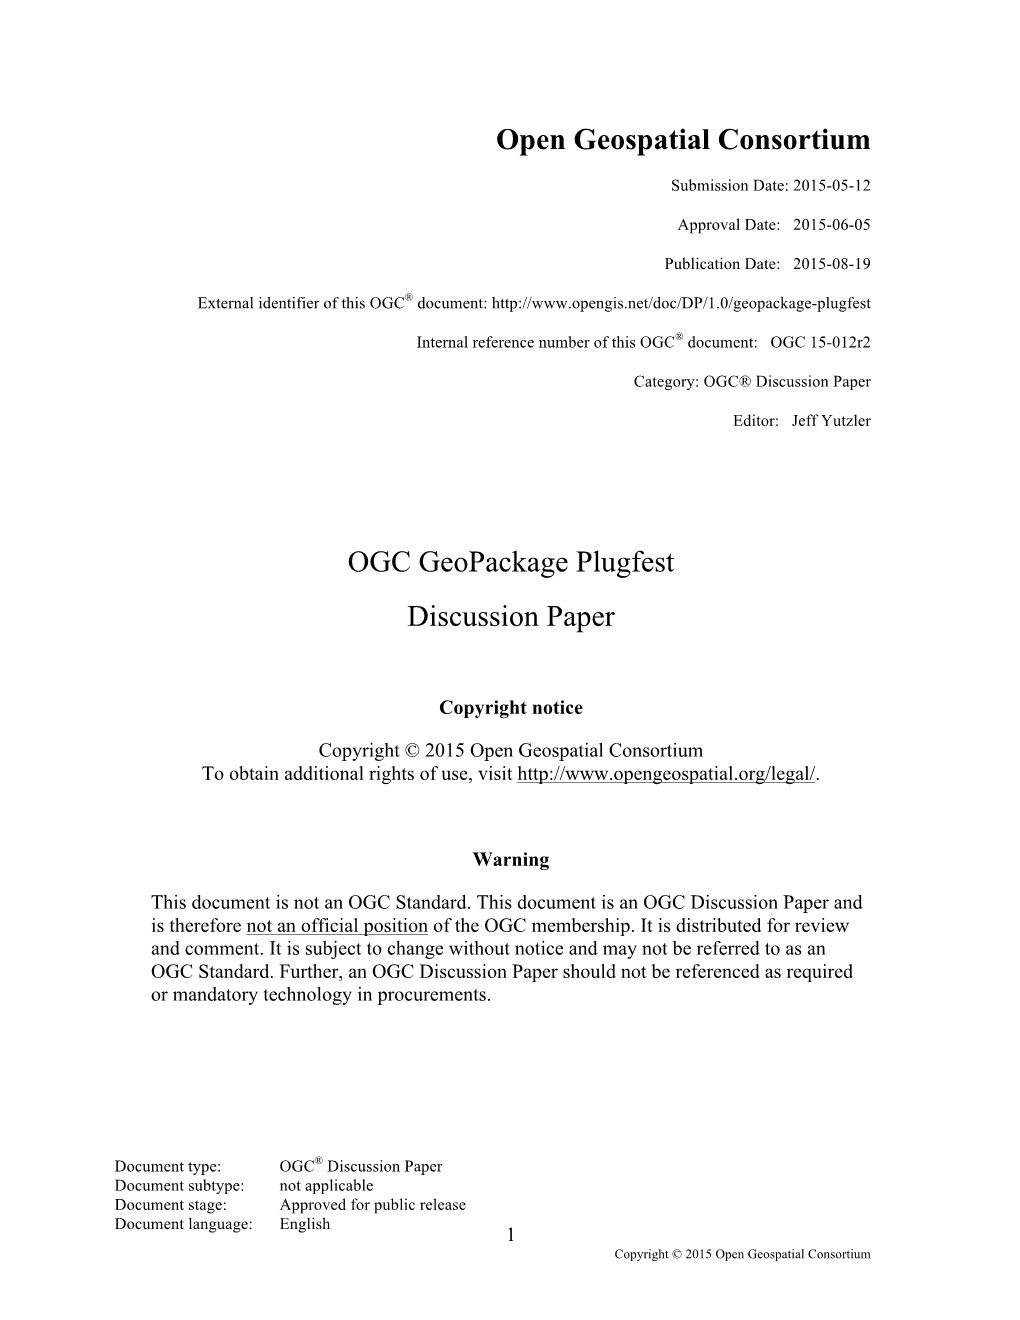 OGC Geopackage Plugfest Discussion Paper